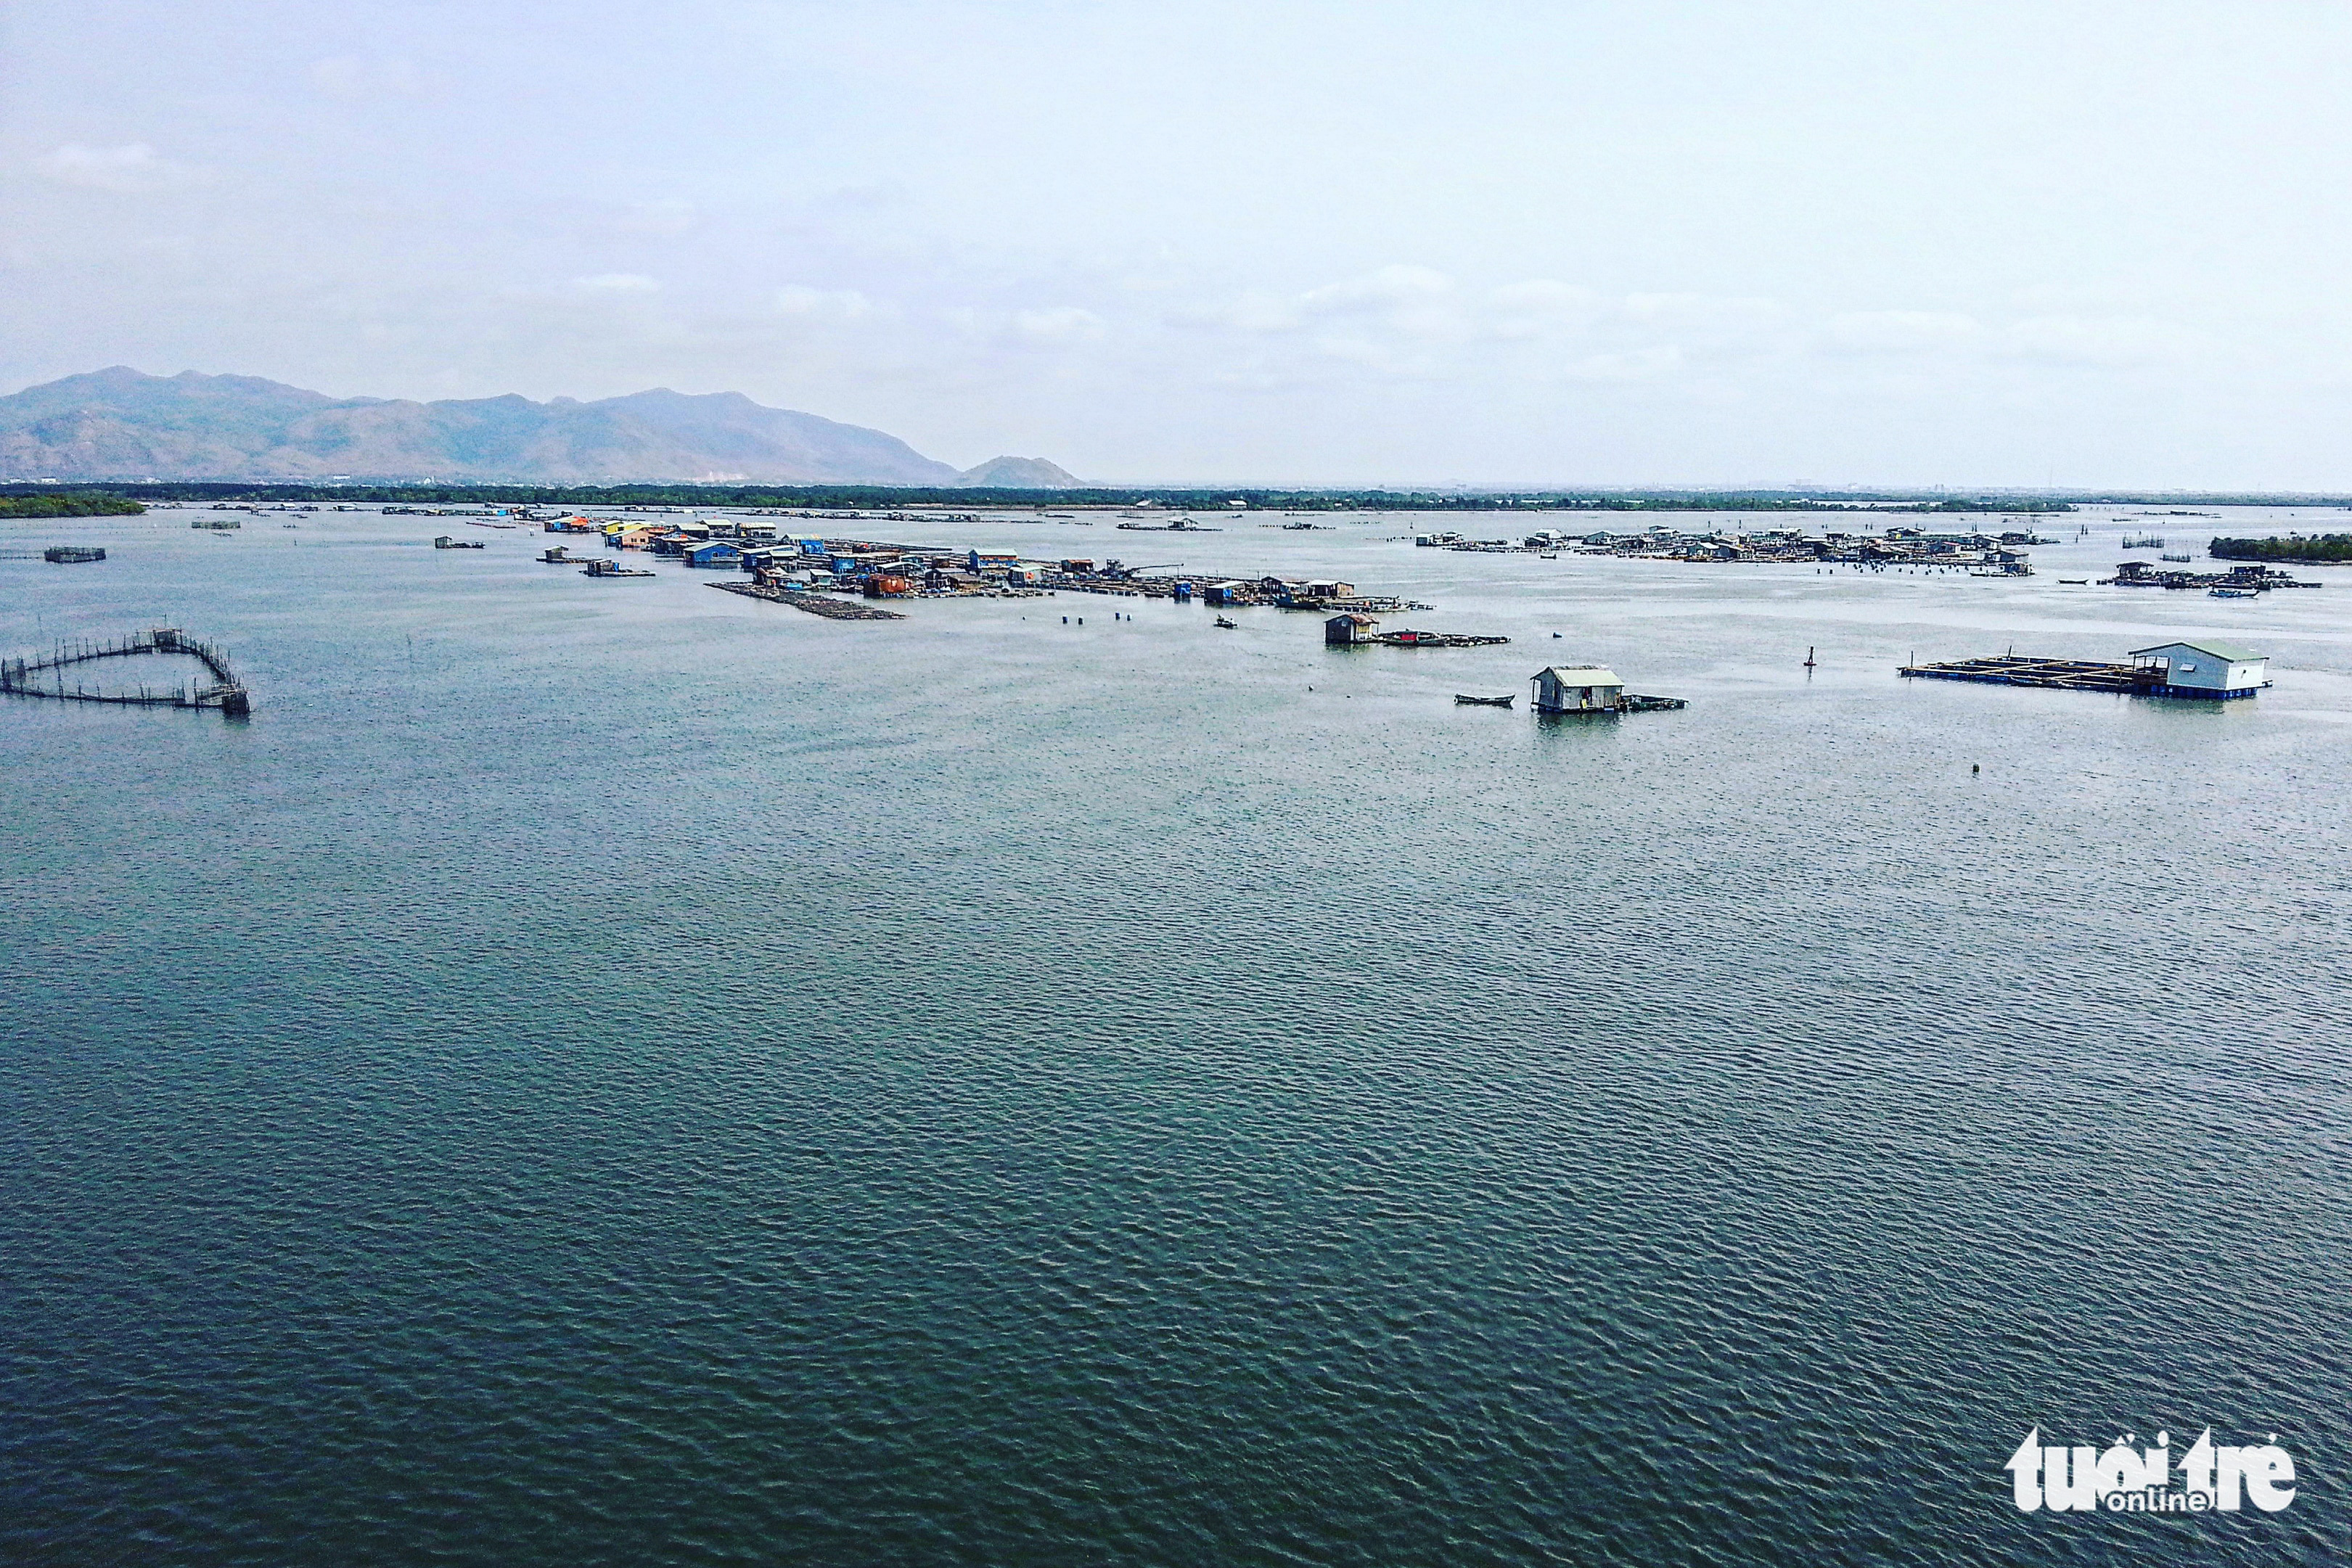 Fish farms in Long Son Island off Ba Ria - Vung Tau Province, Vietnam. Photo: Gia Tien / Tuoi Tre